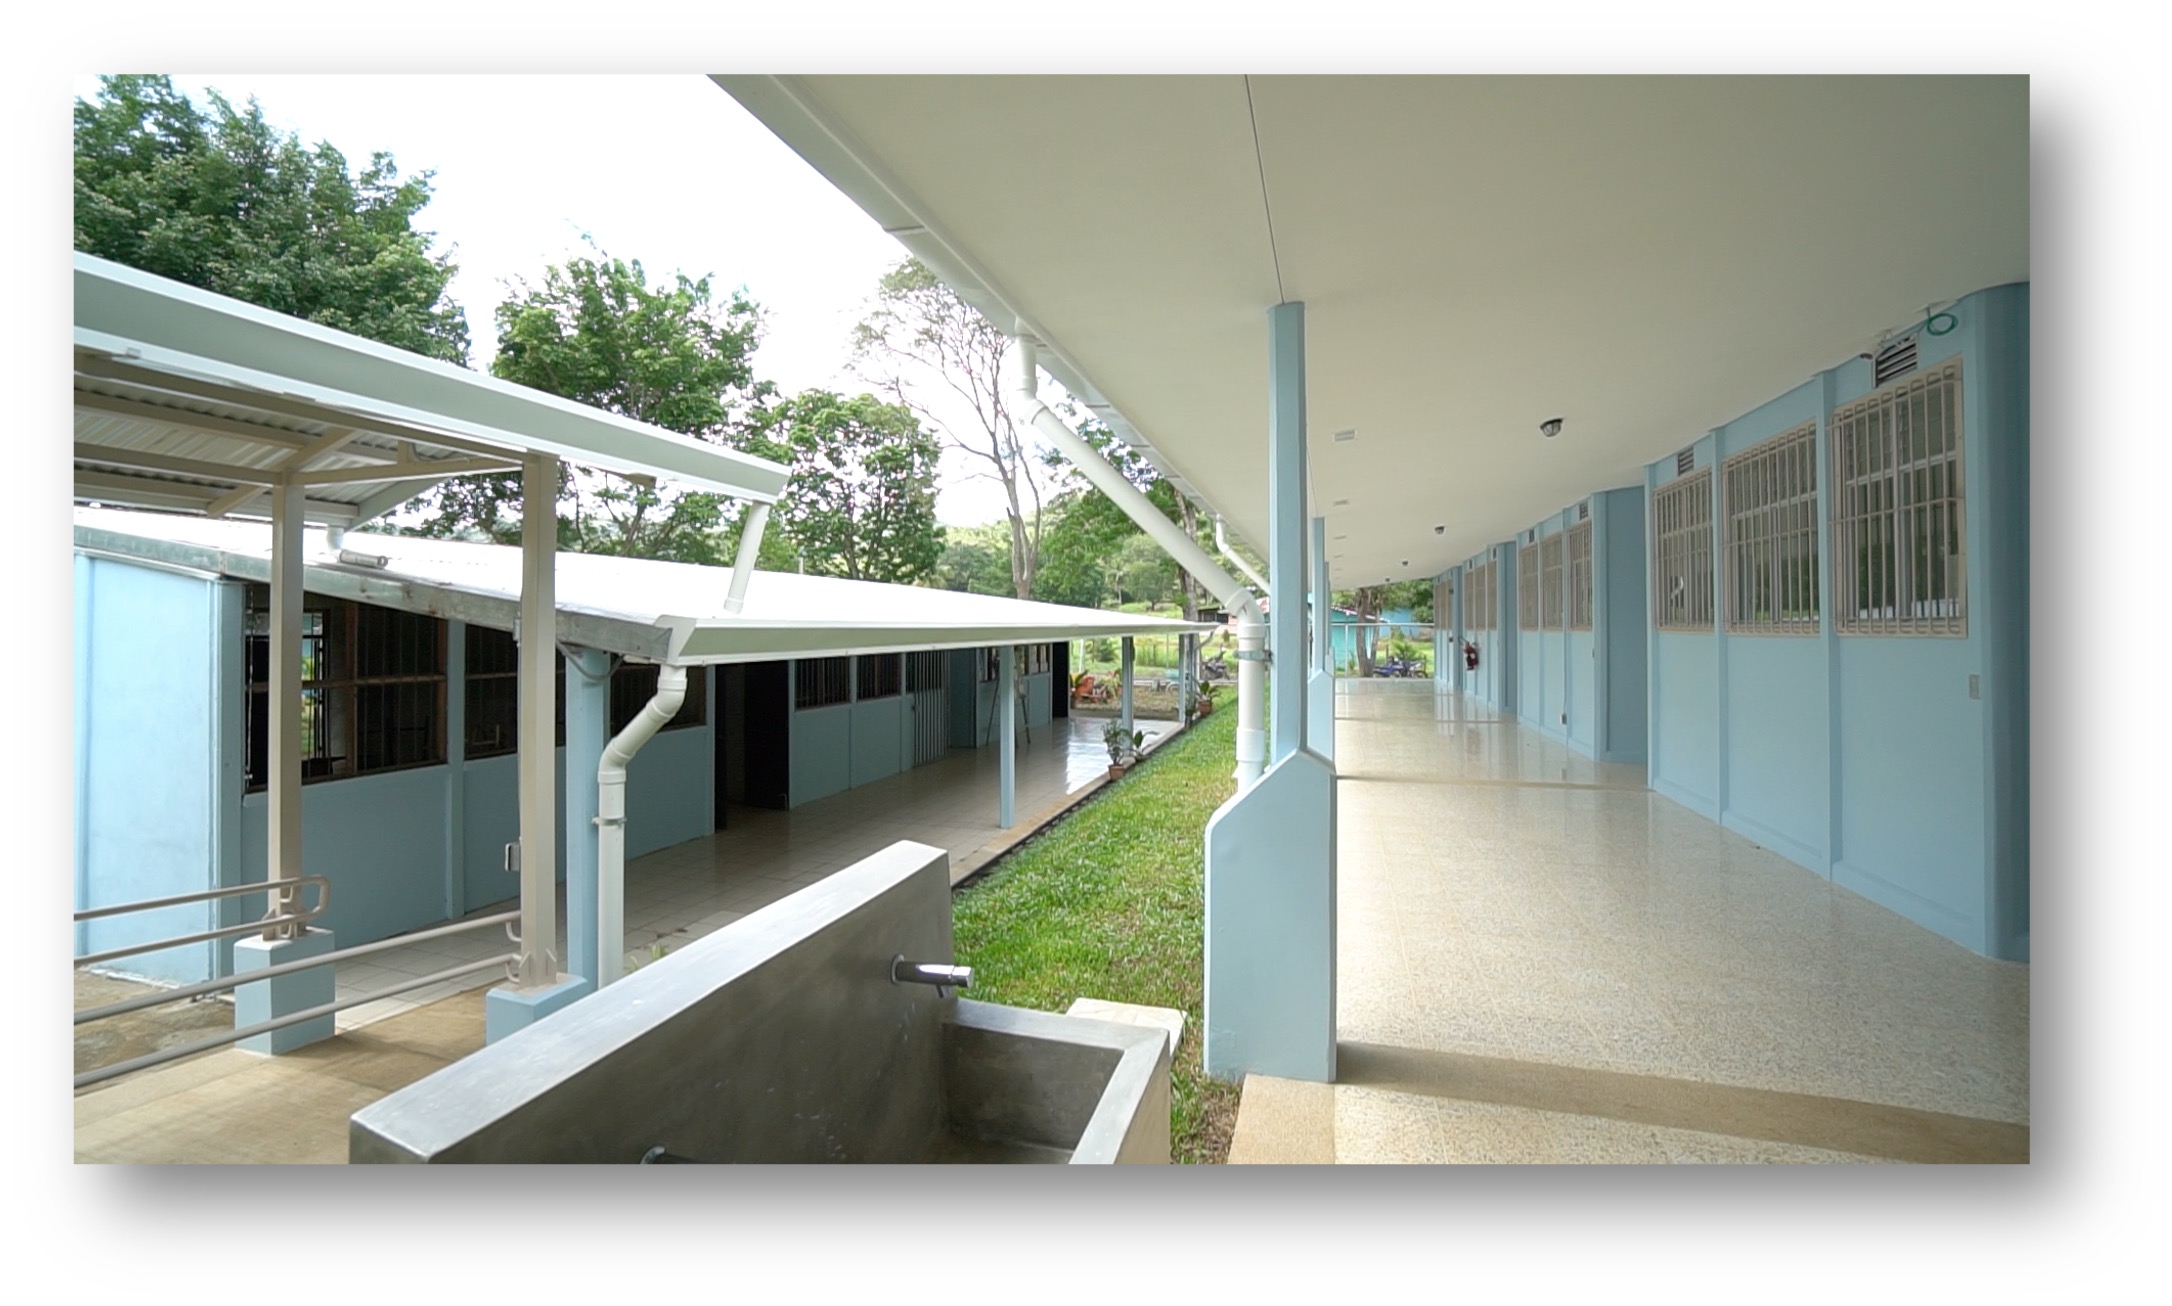 Liceo Colonia del Valle